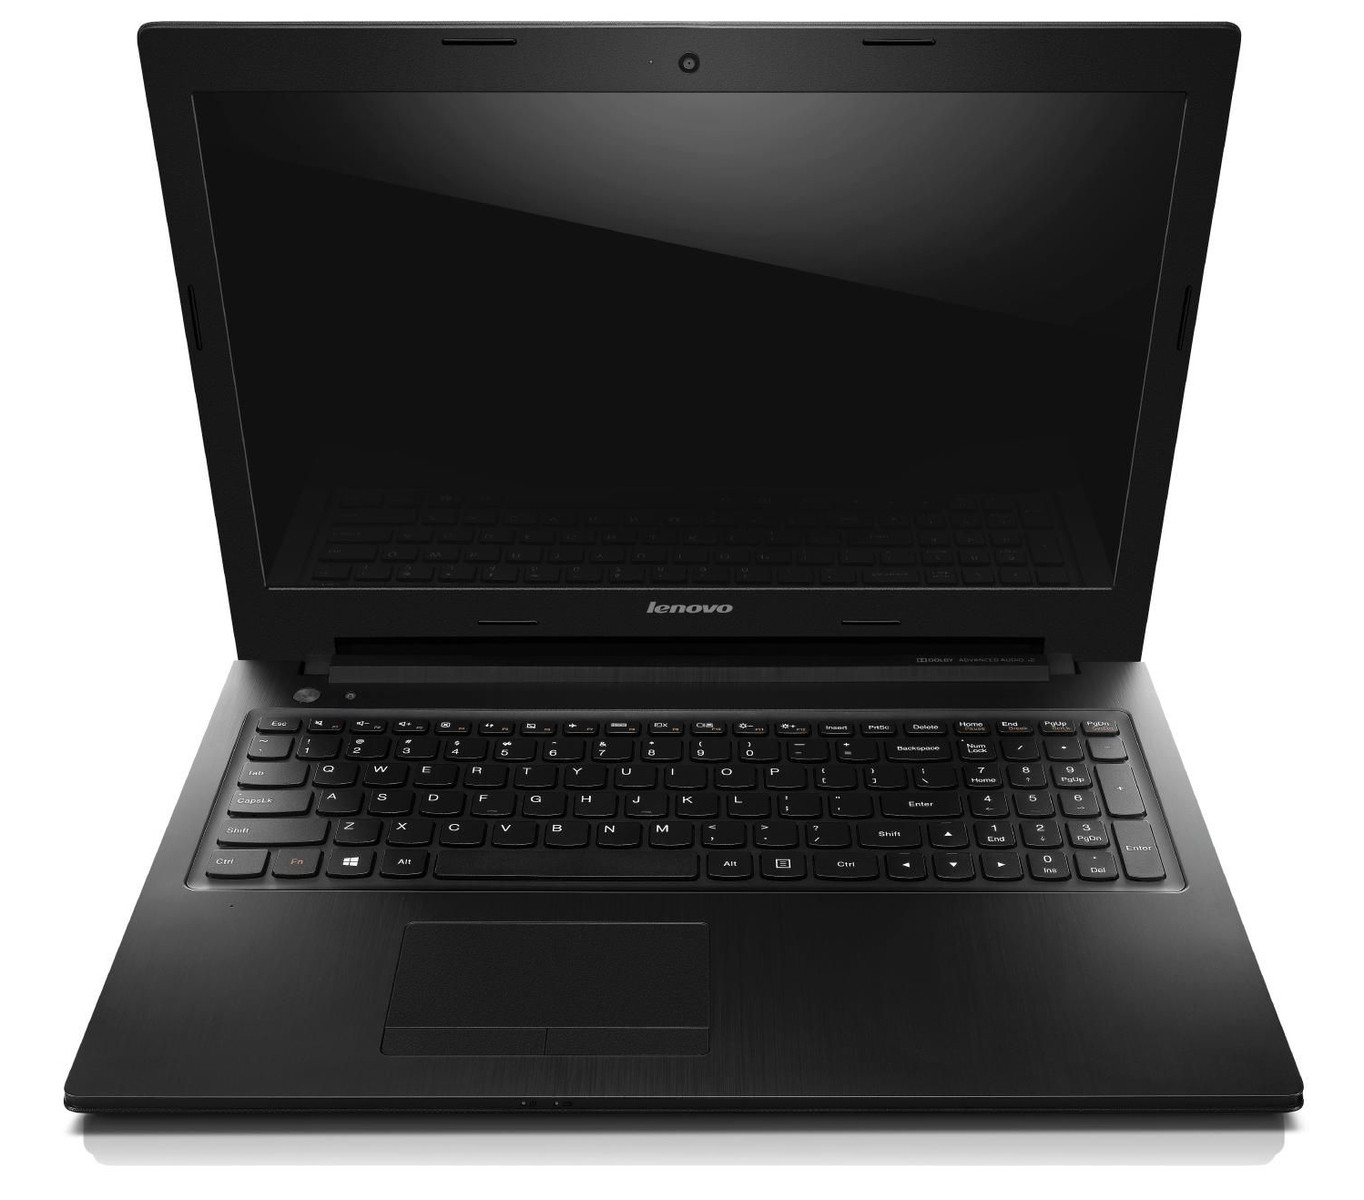 Review Lenovo G505s-20255 Notebook - NotebookCheck.net Reviews